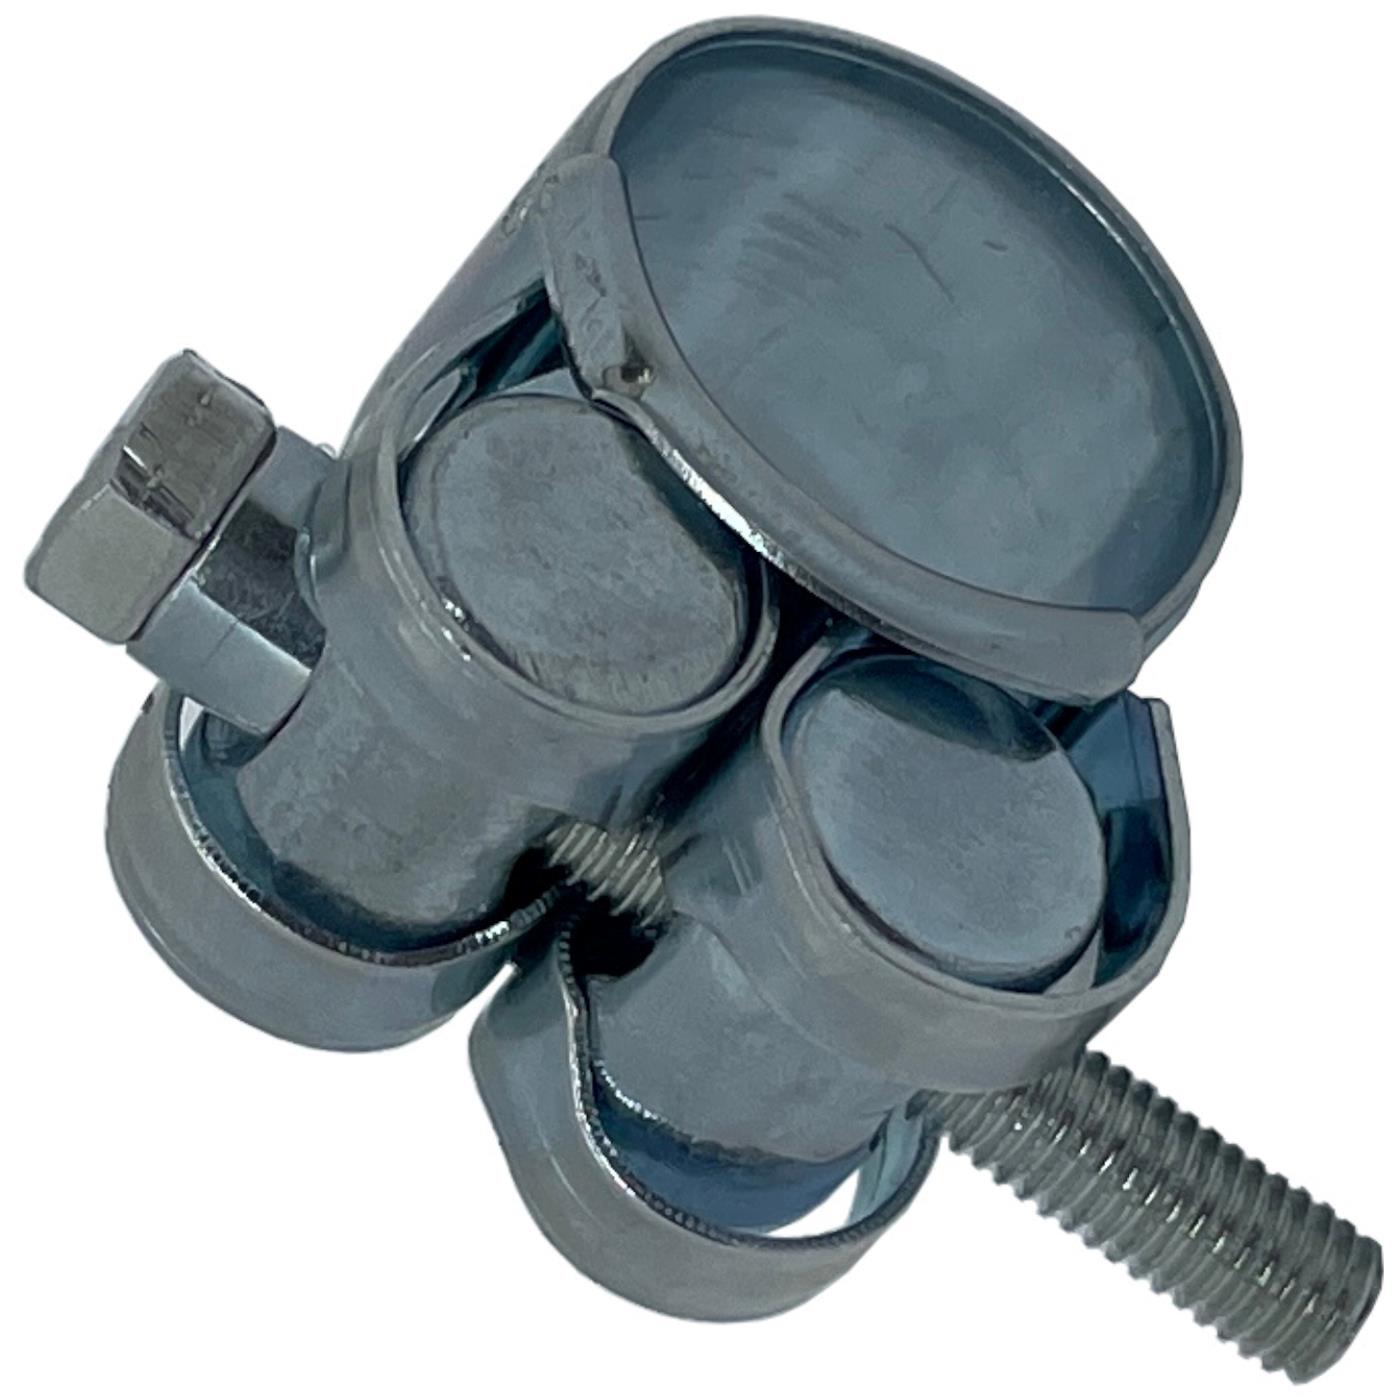 4x Lumonic Hinge pin clamp 26-28mm Galvanised Exhaust clamp for construction cars trucks